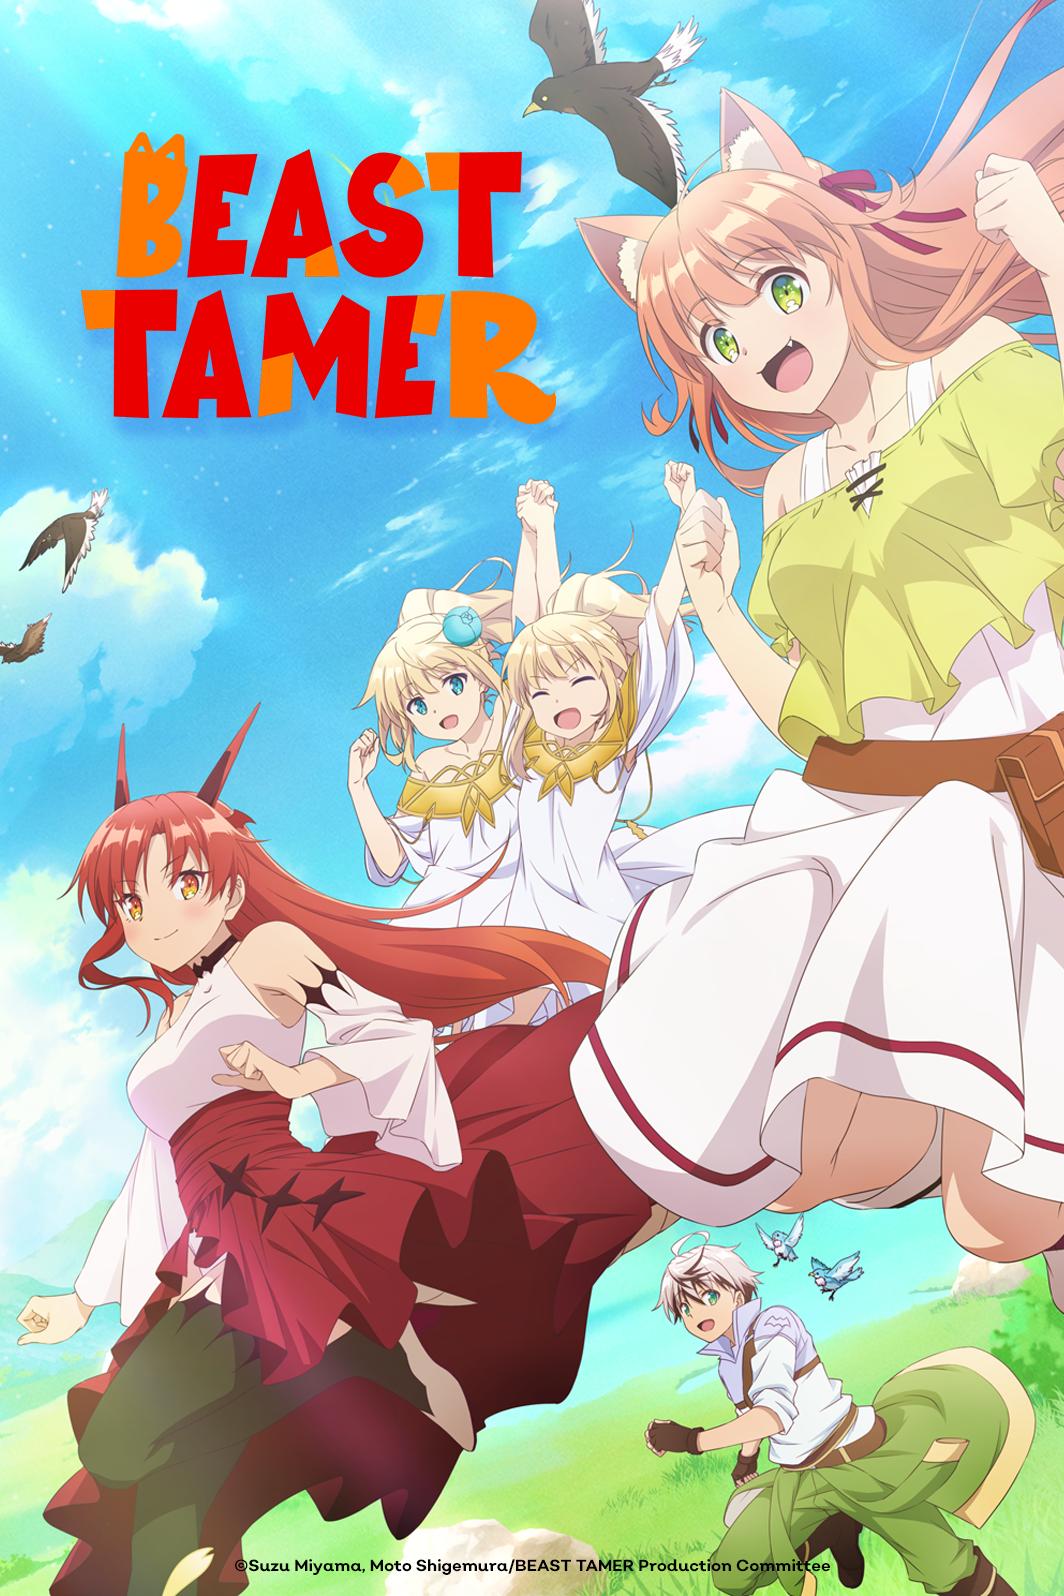 TV ratings for Beast Tamer (勇者パーティーを追放されたビーストテイマー、最強種の猫耳少女と出会う) in Malaysia. Tokyo MX TV series